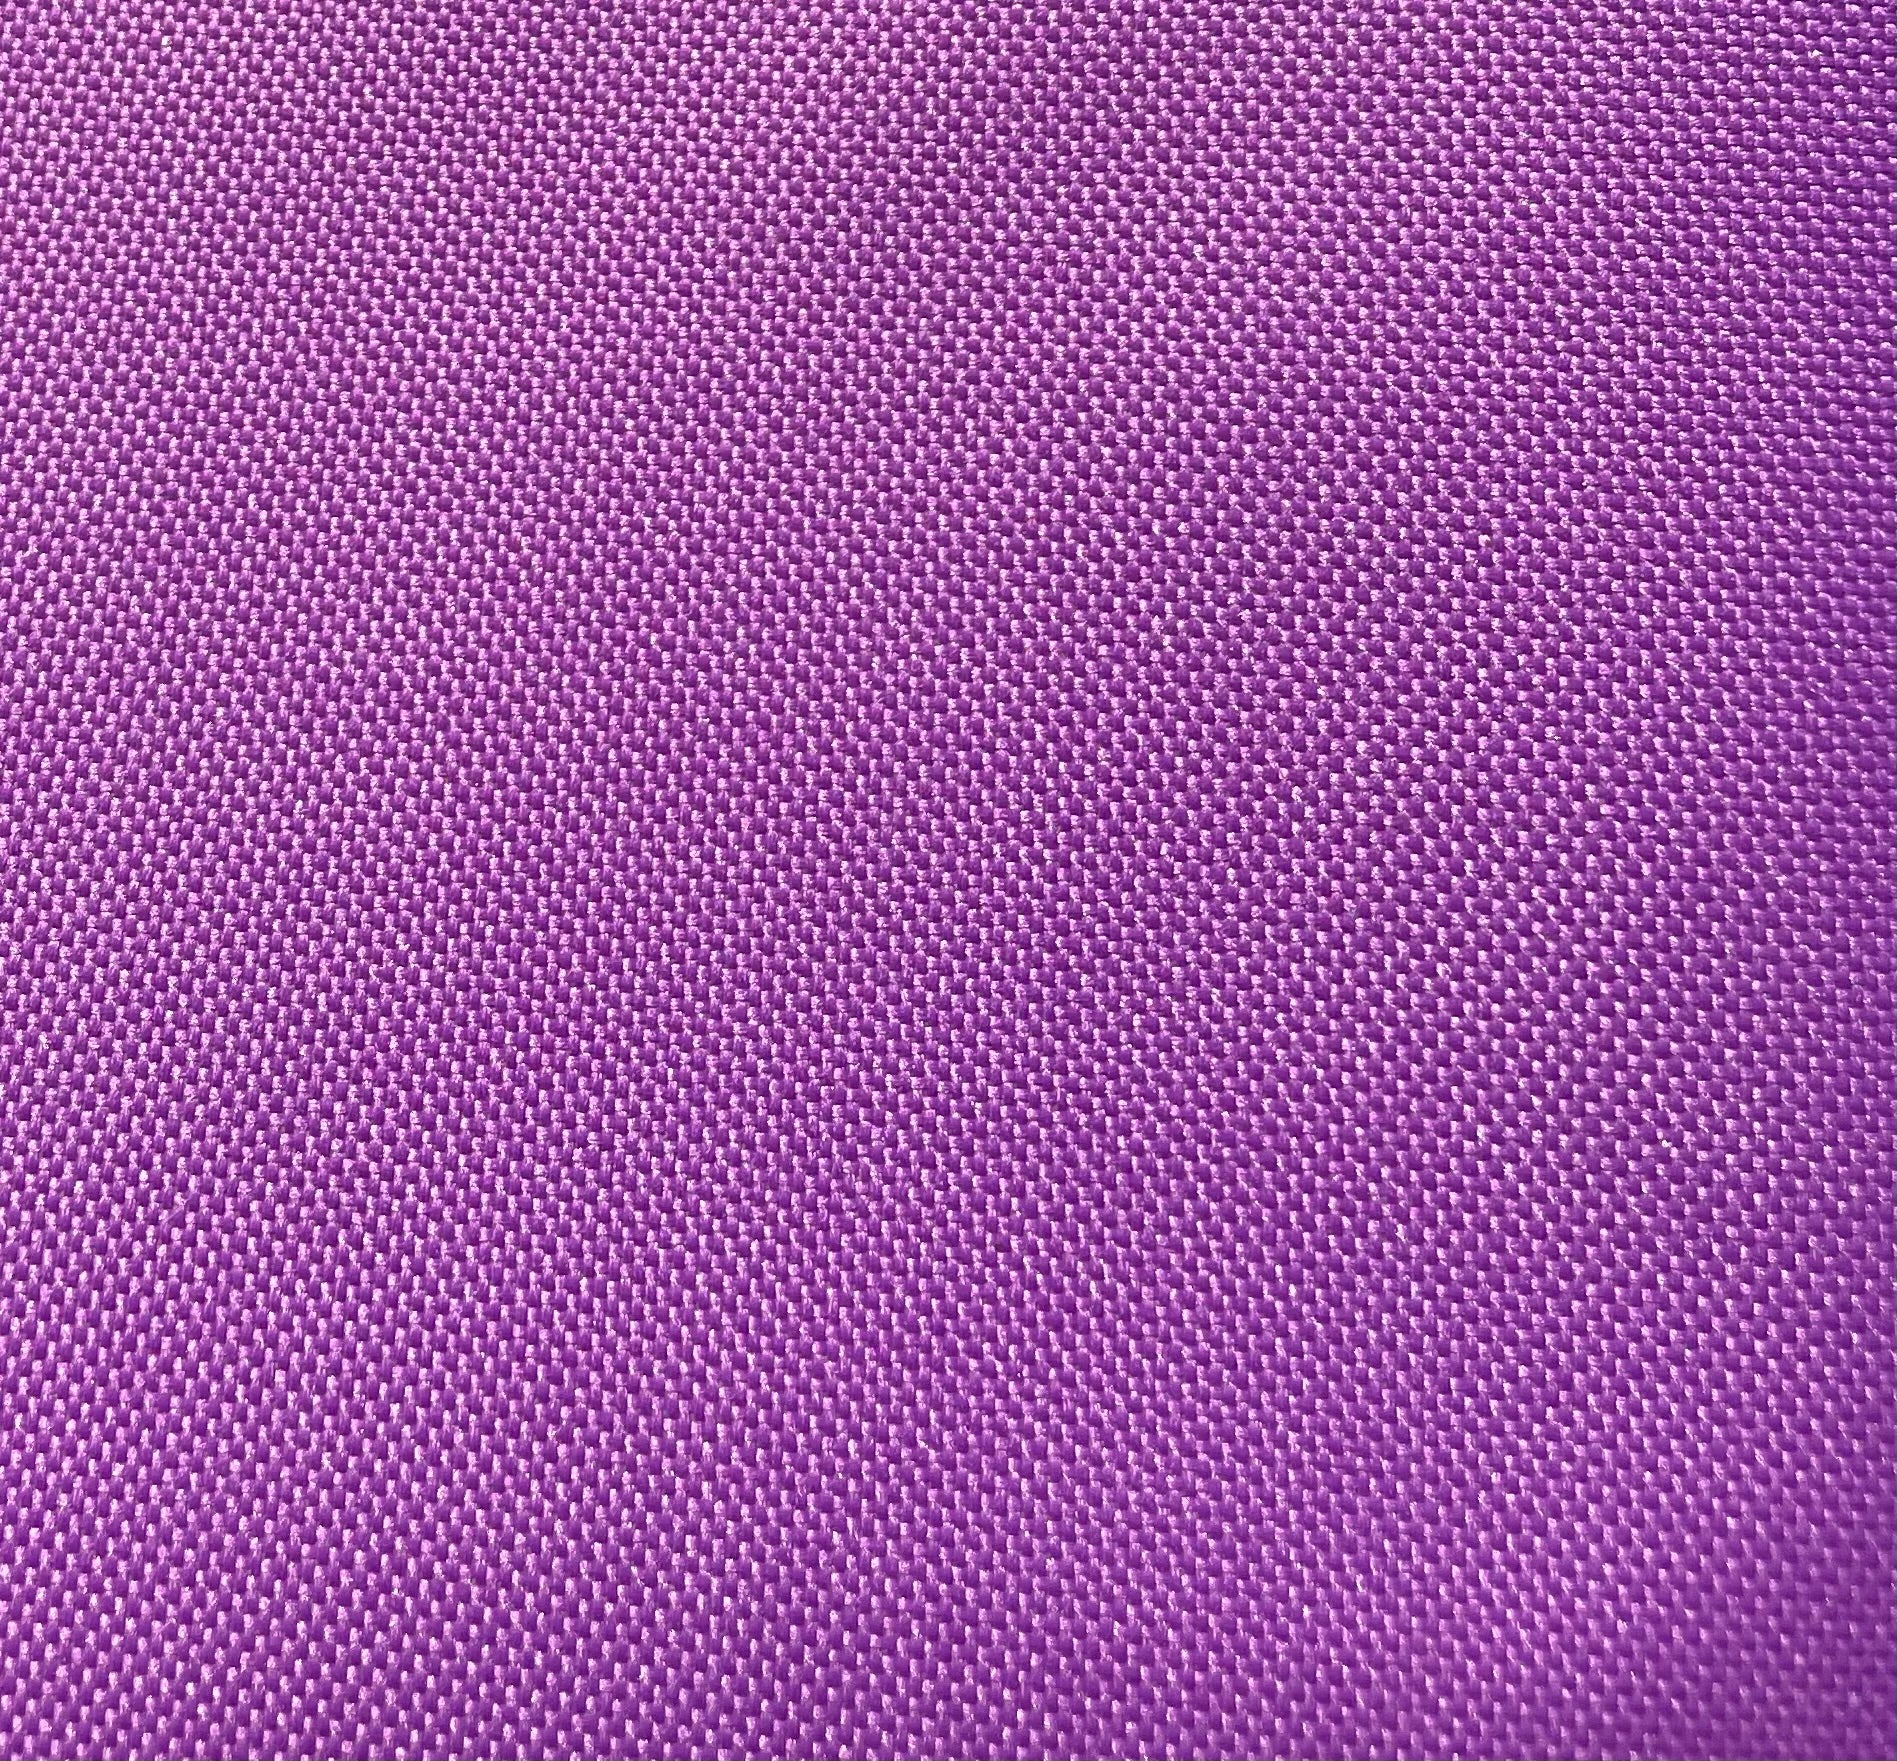 Violet Water Resistant Canvas